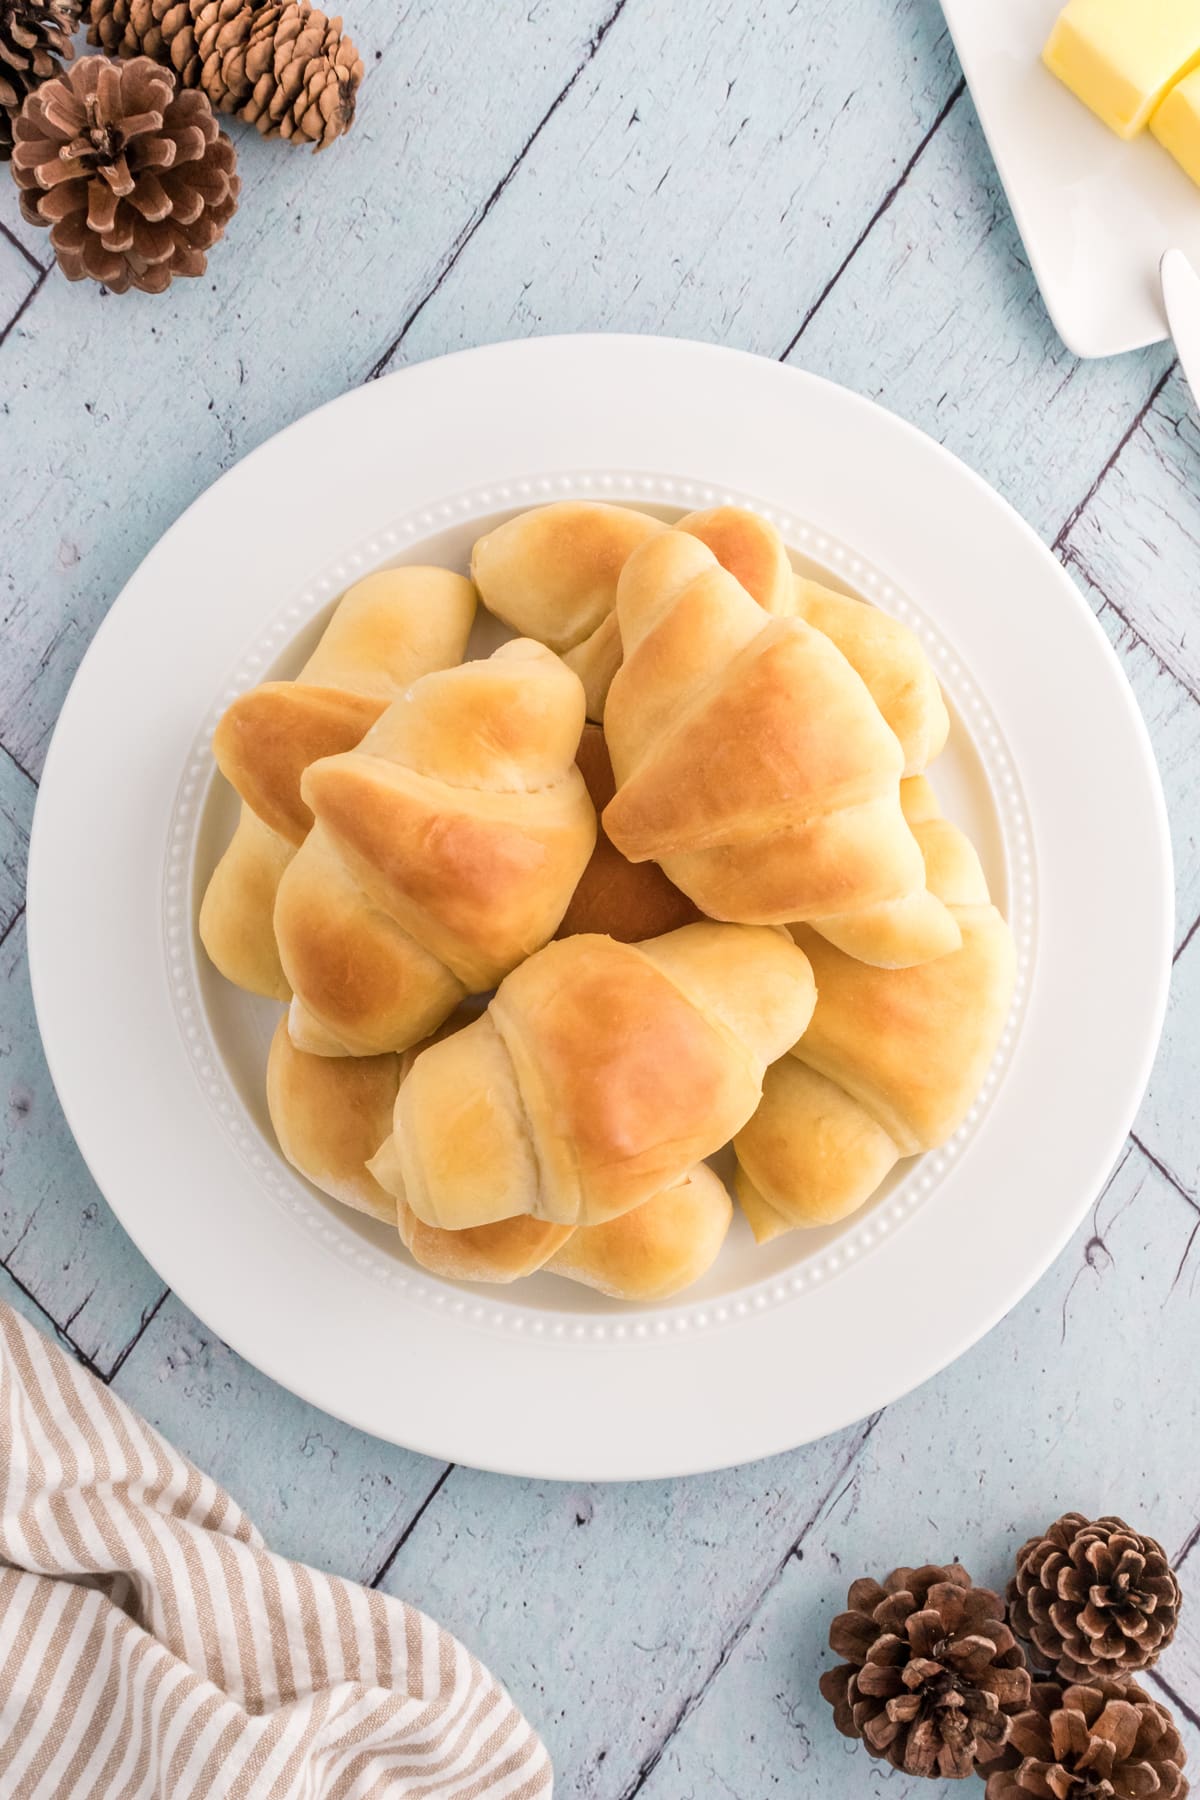 A plate of homemade crescent rolls